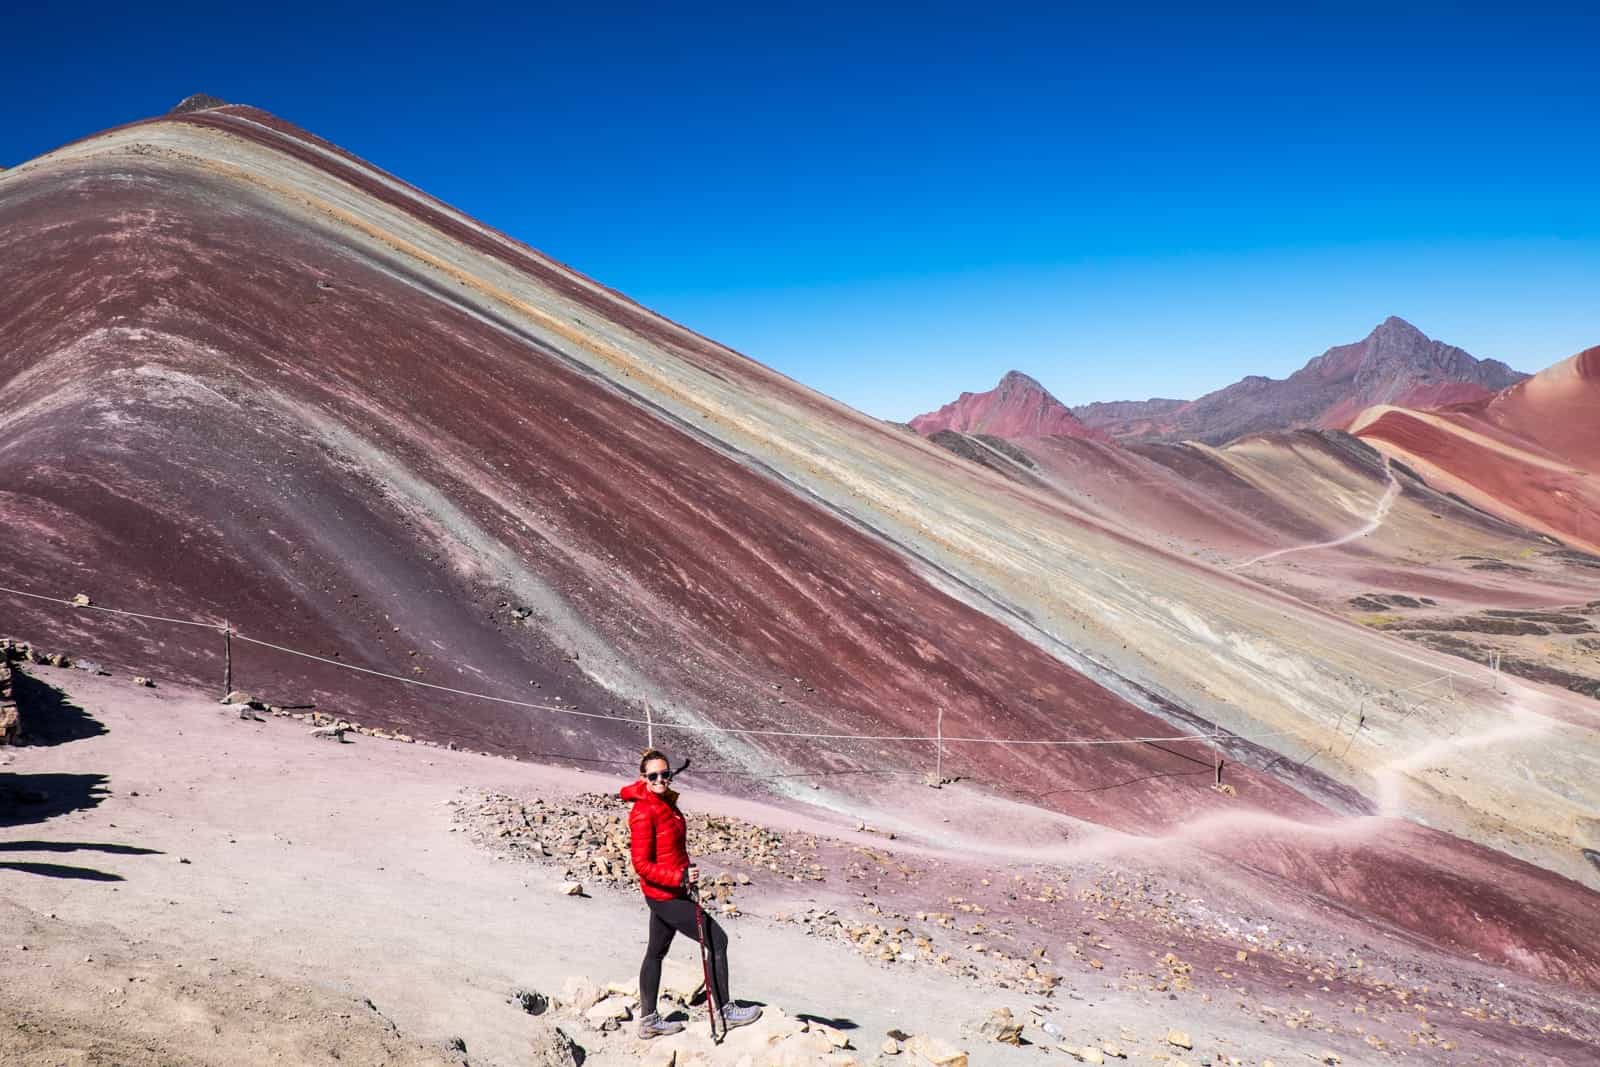 The trek to Rainbow Mountain in Peru from Cusco